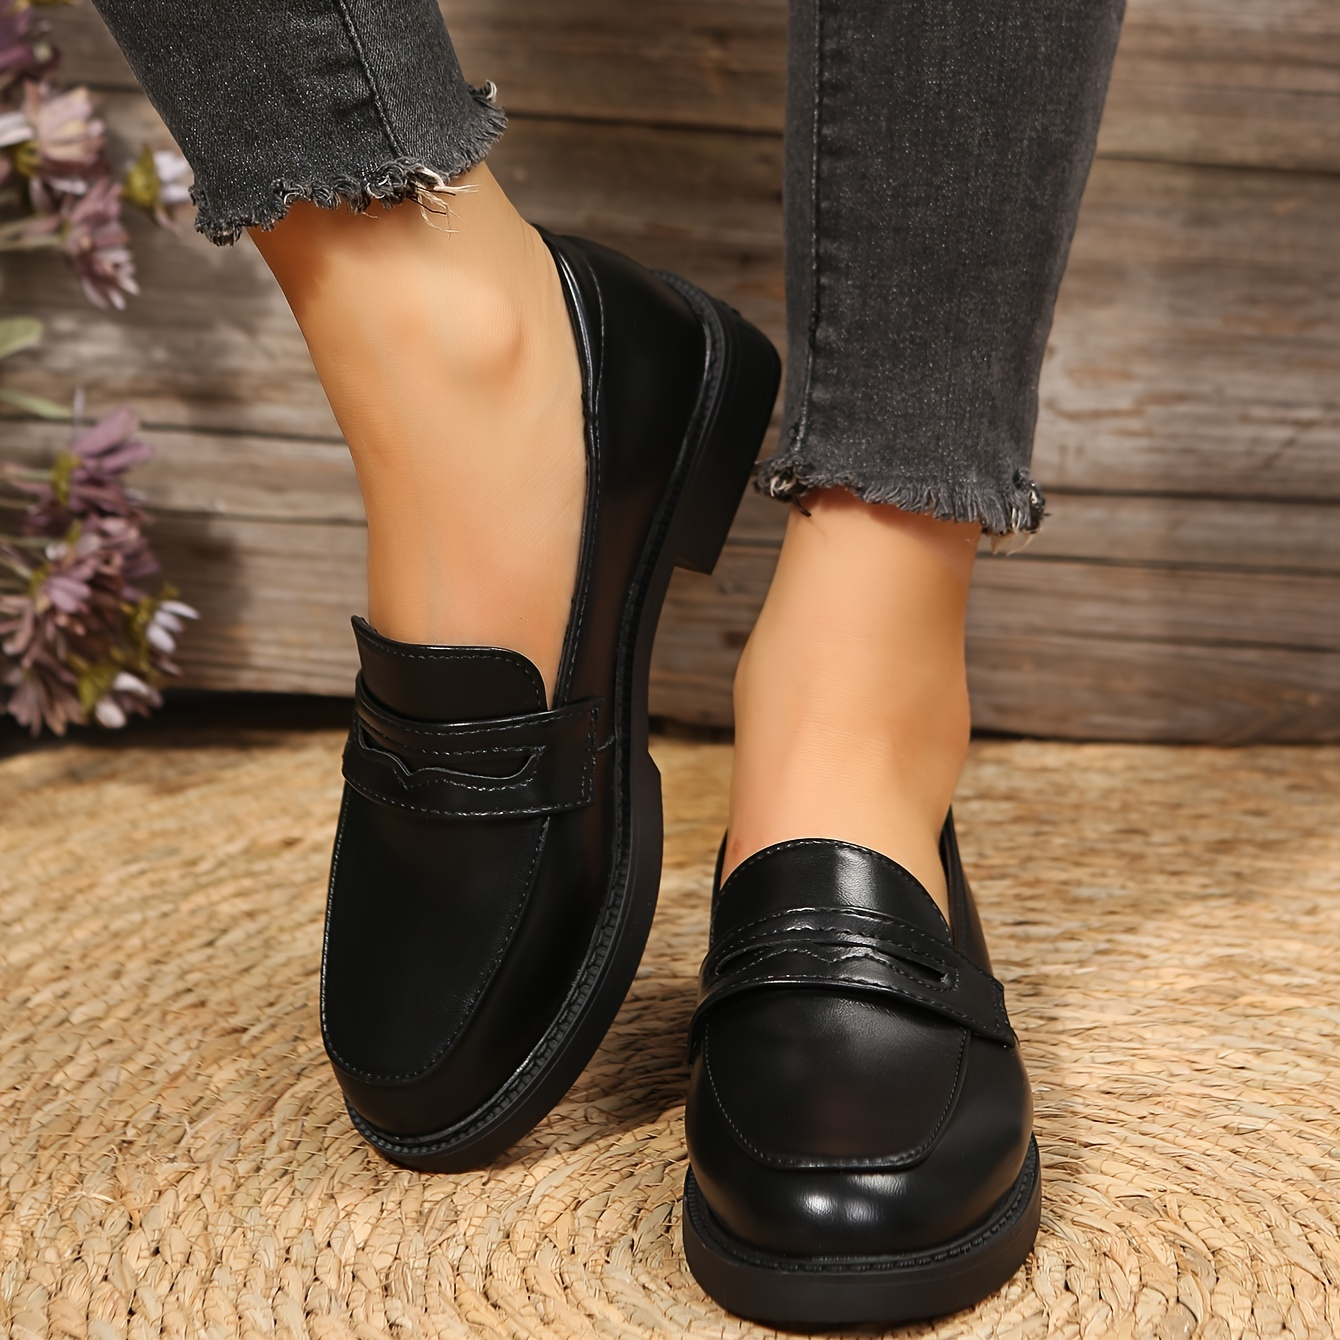 Teramo Shoe - Black - Soft Tumble Leather Loafer Shoes, Shoes